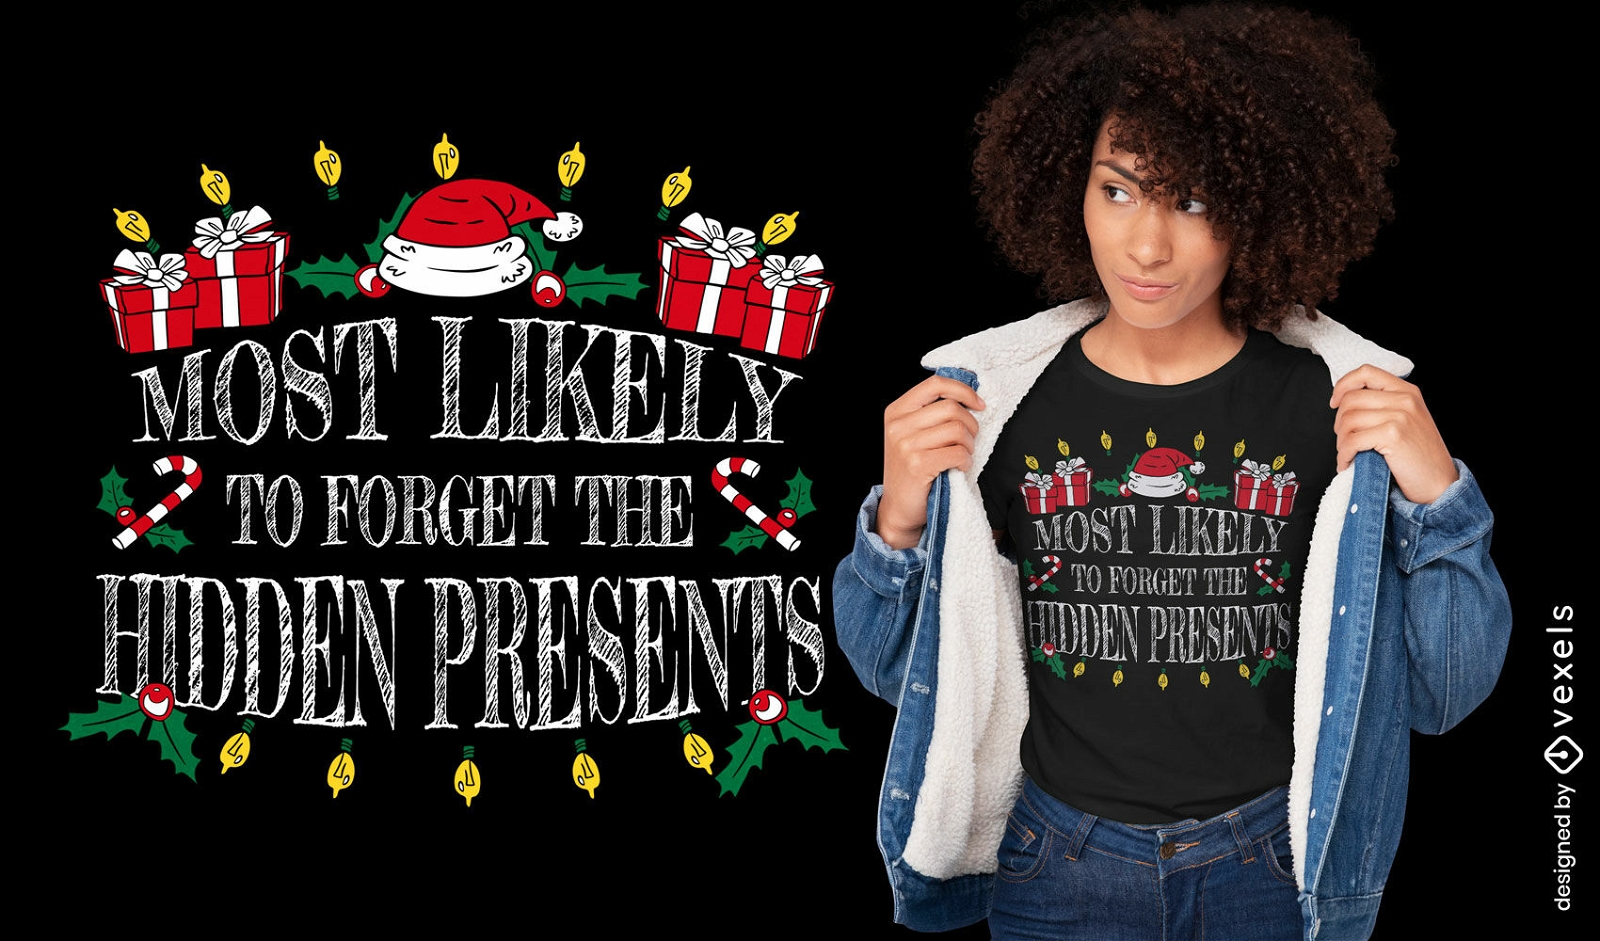 Hidden presents christmas quote t-shirt design